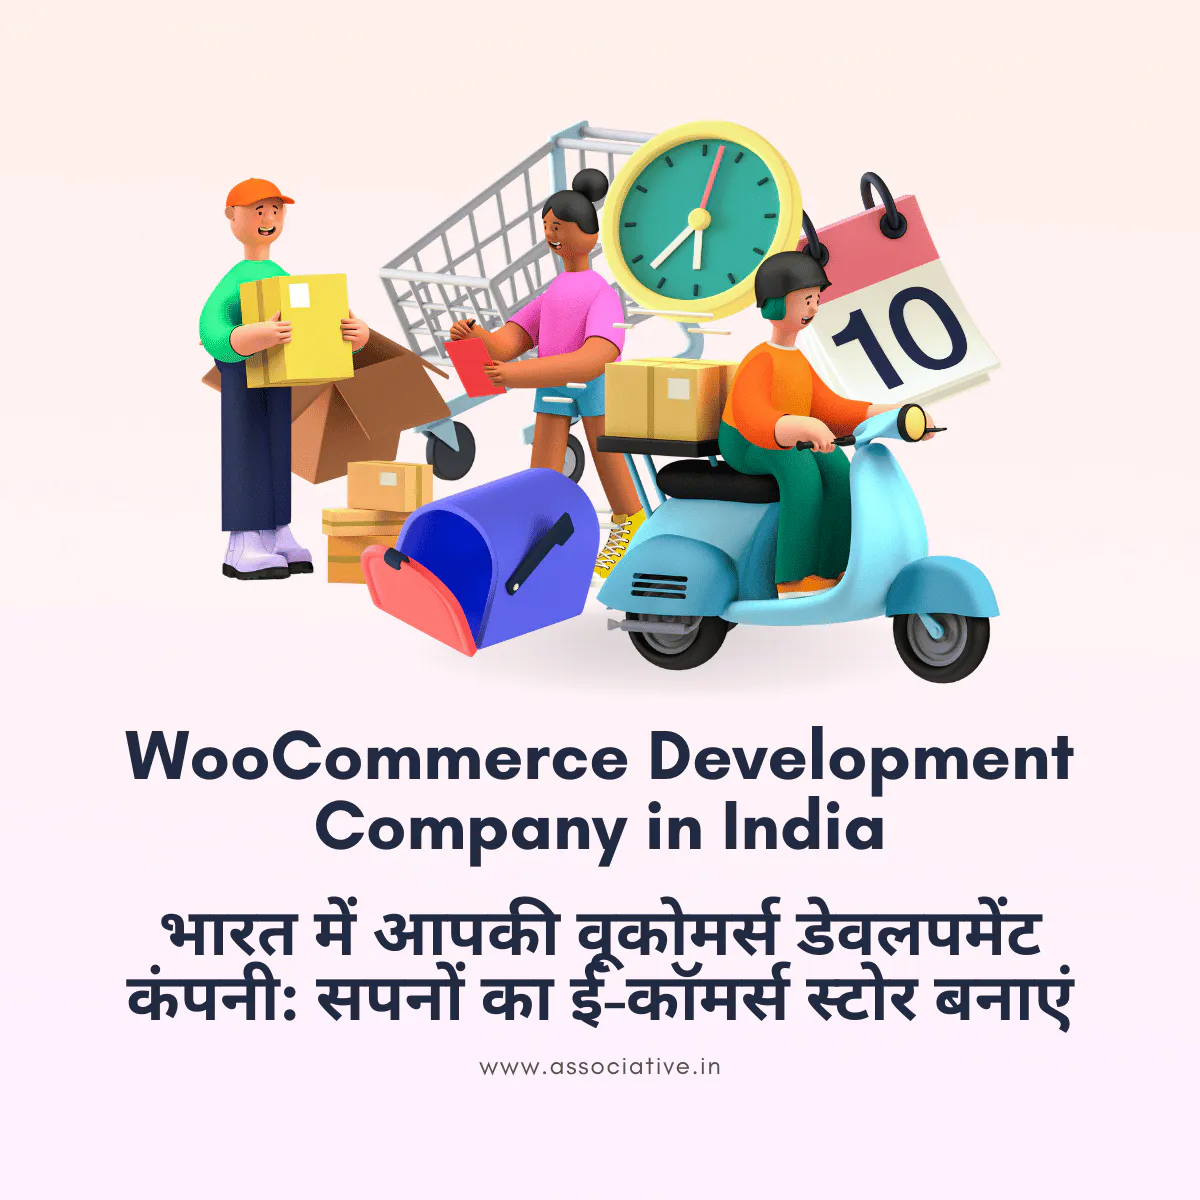 WooCommerce Development Company in India